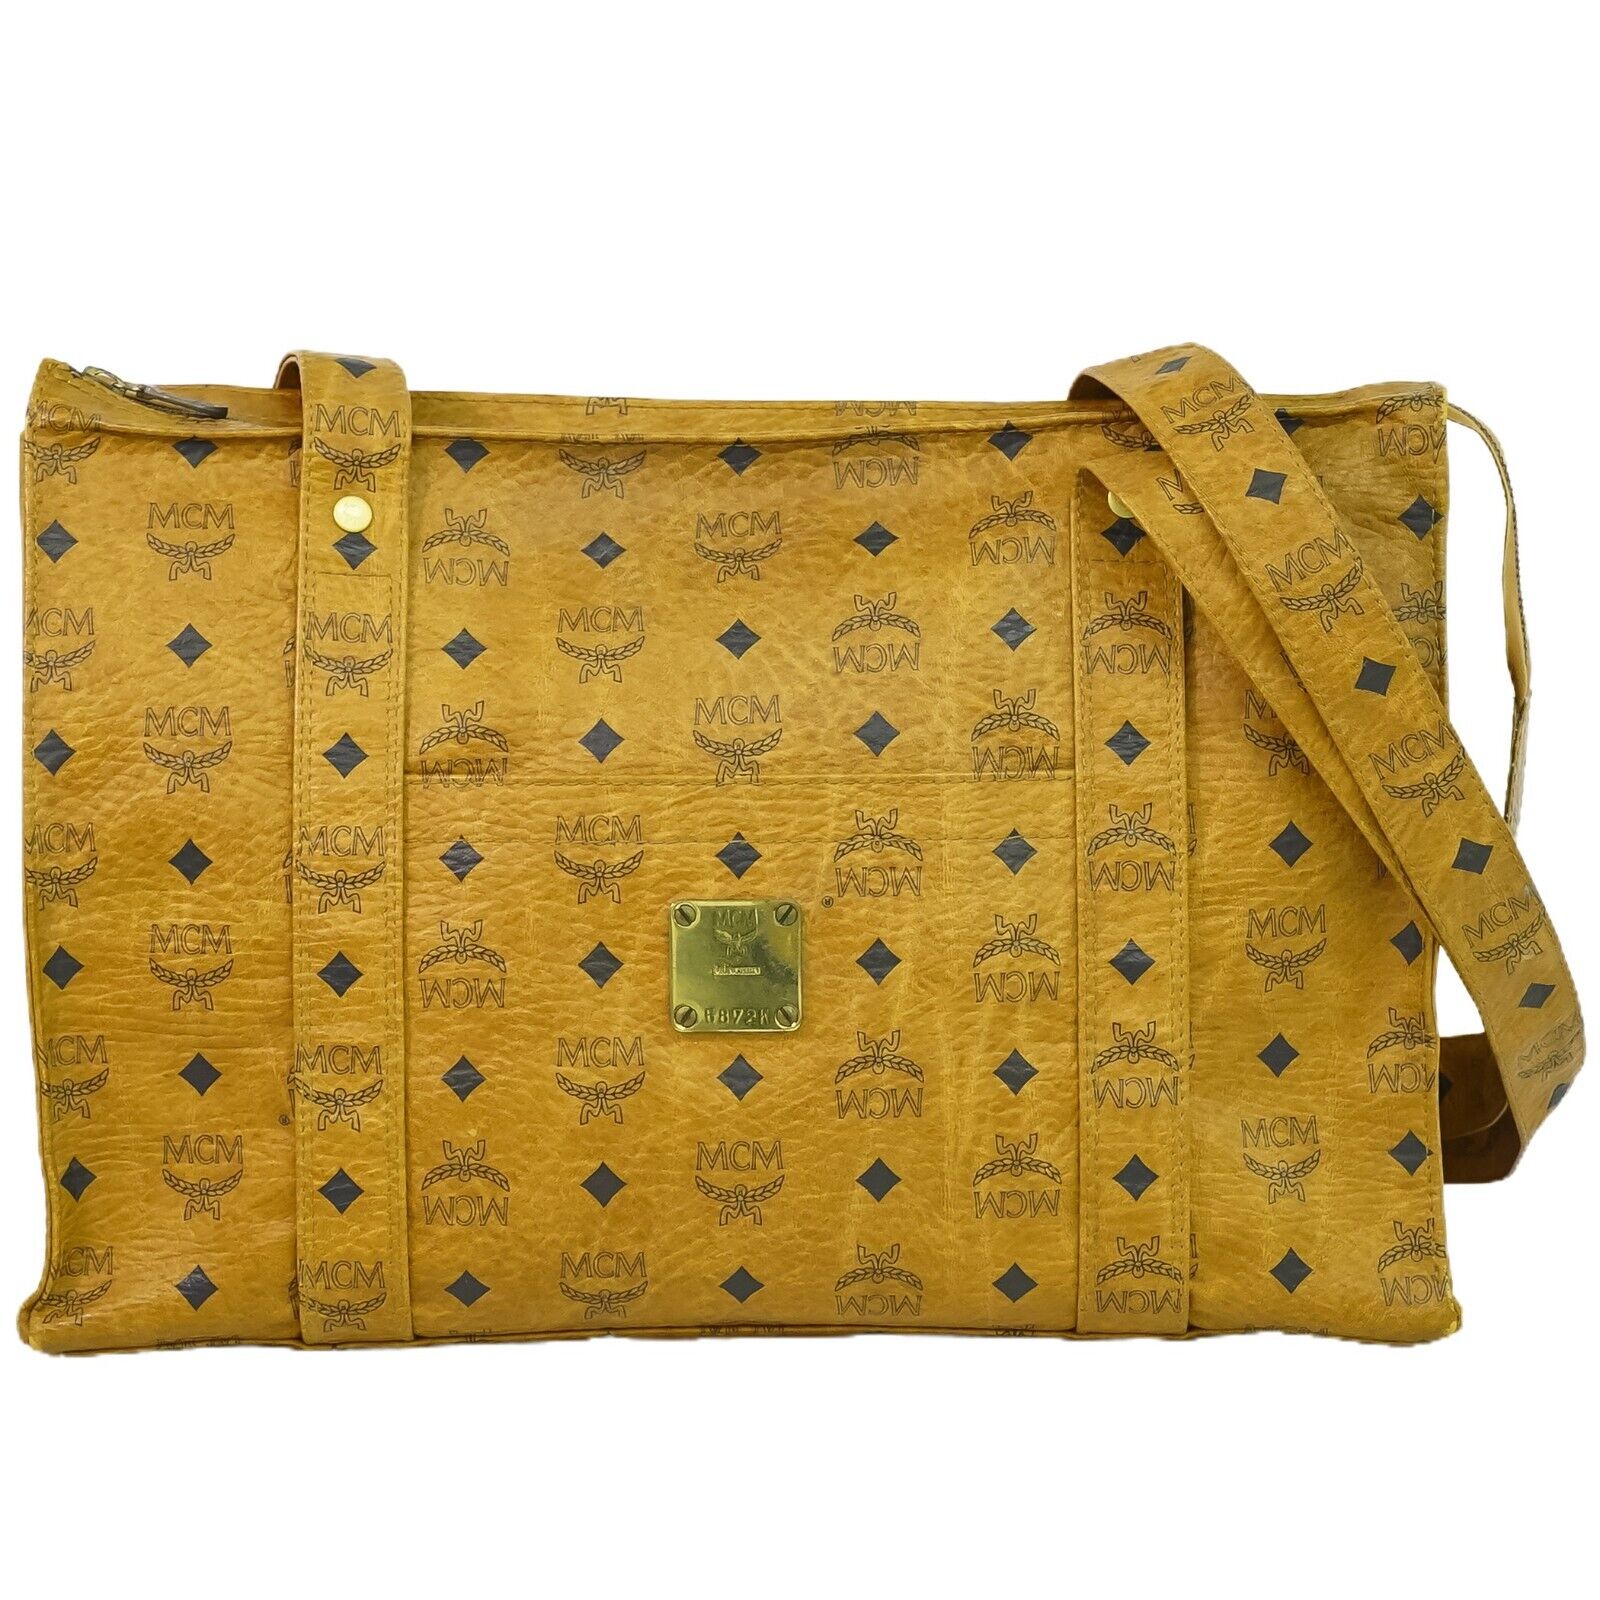 Classic Canvas Designer Handbag - Elegant and Timeless Fashion Accessory